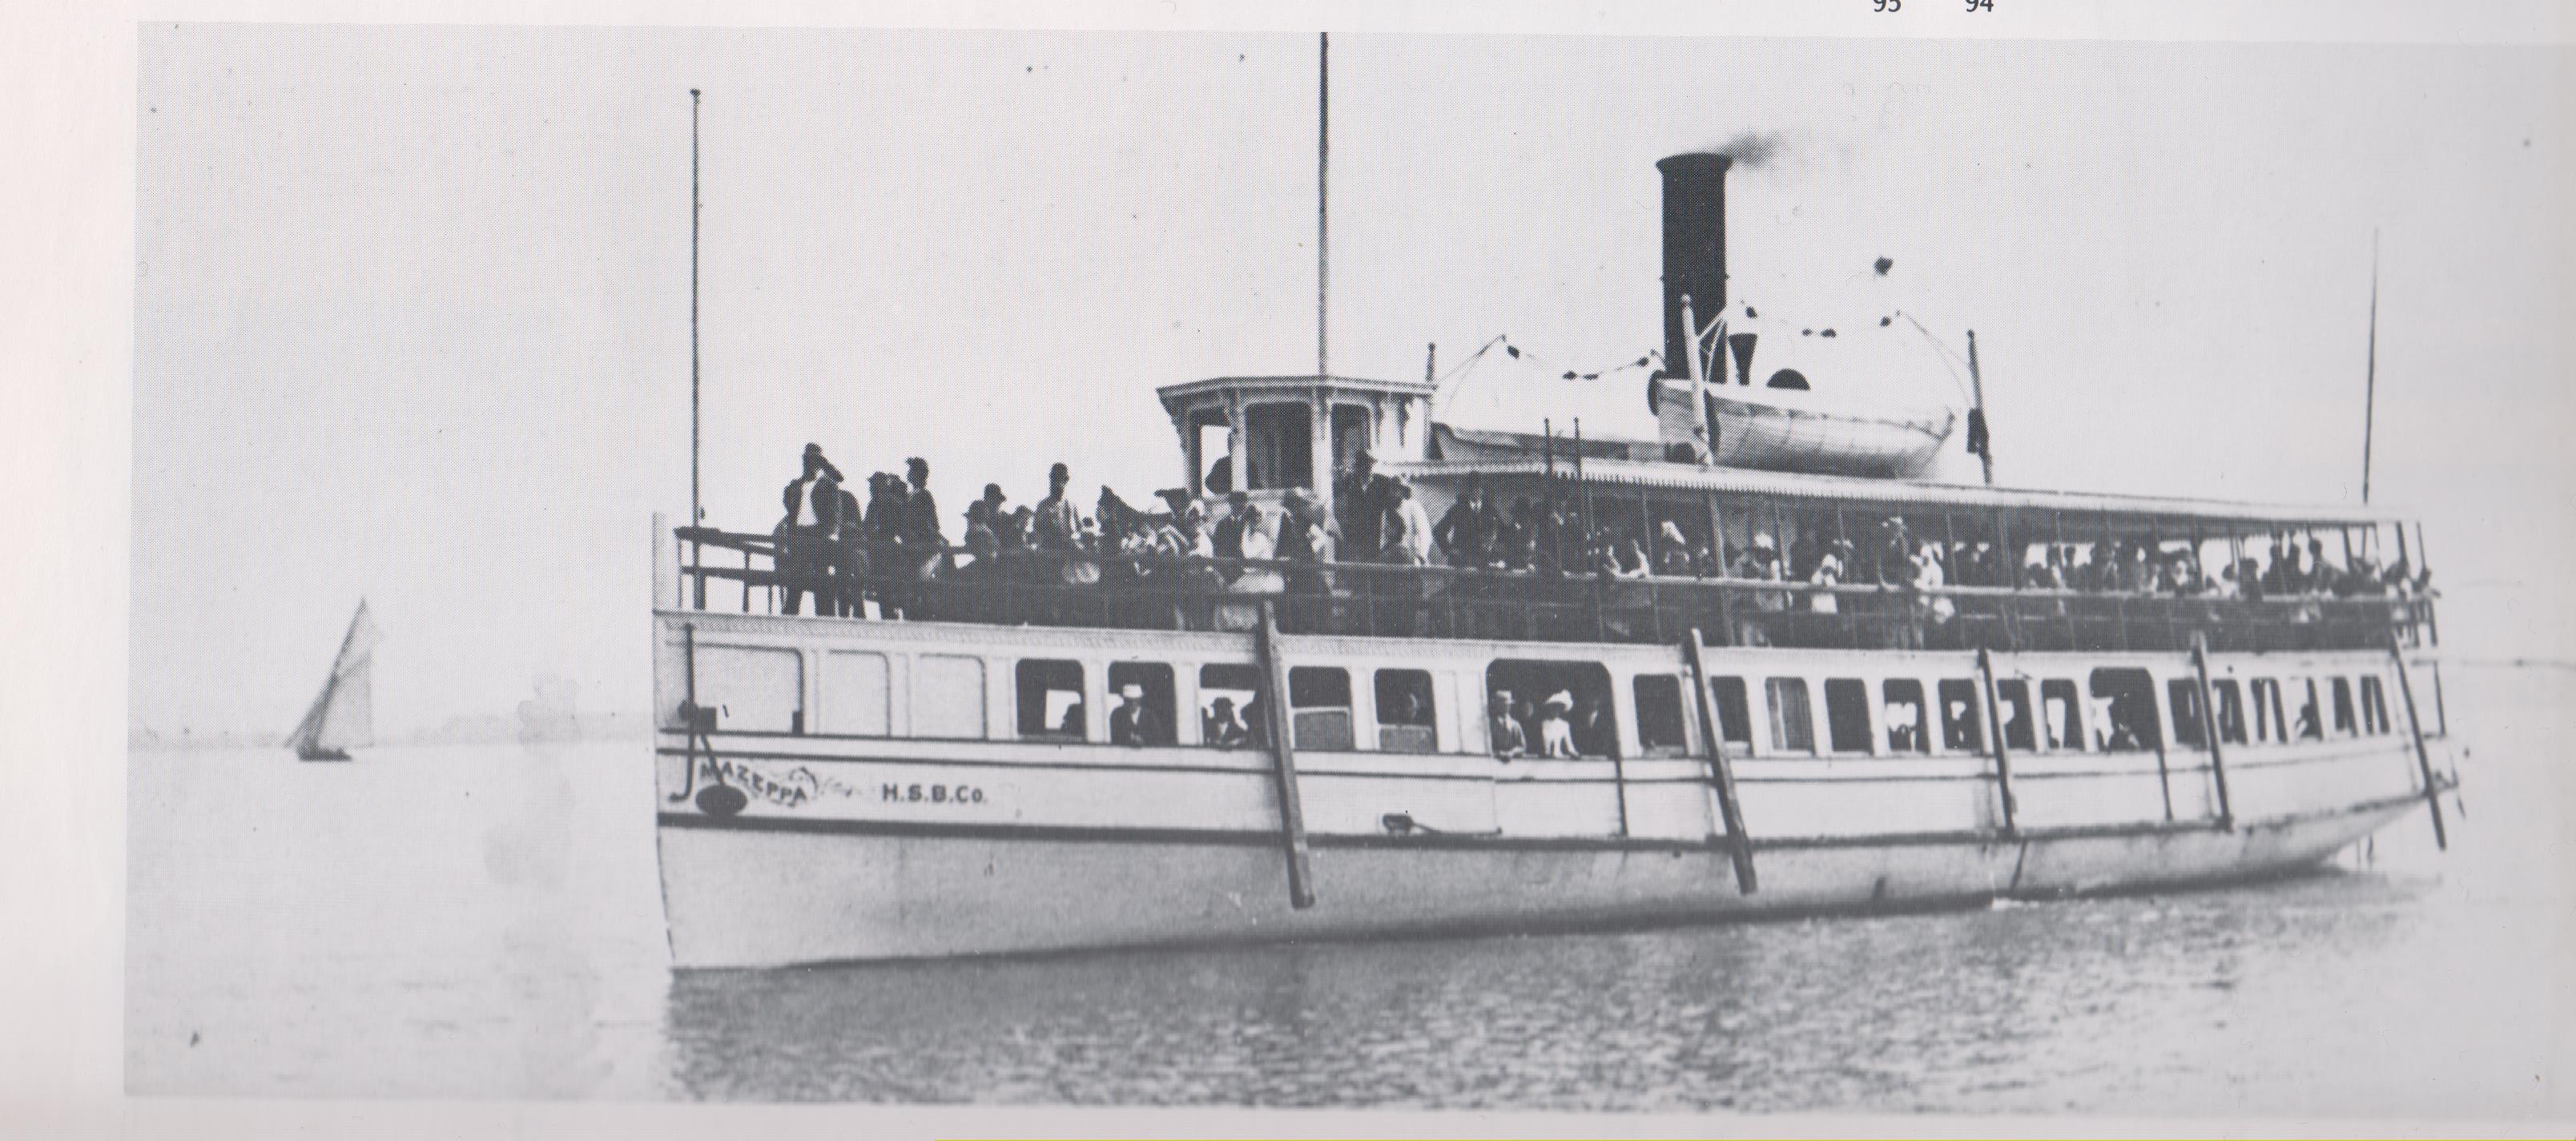 sent-mazeppa 1889 owned by hamilton steamboat company.jpg